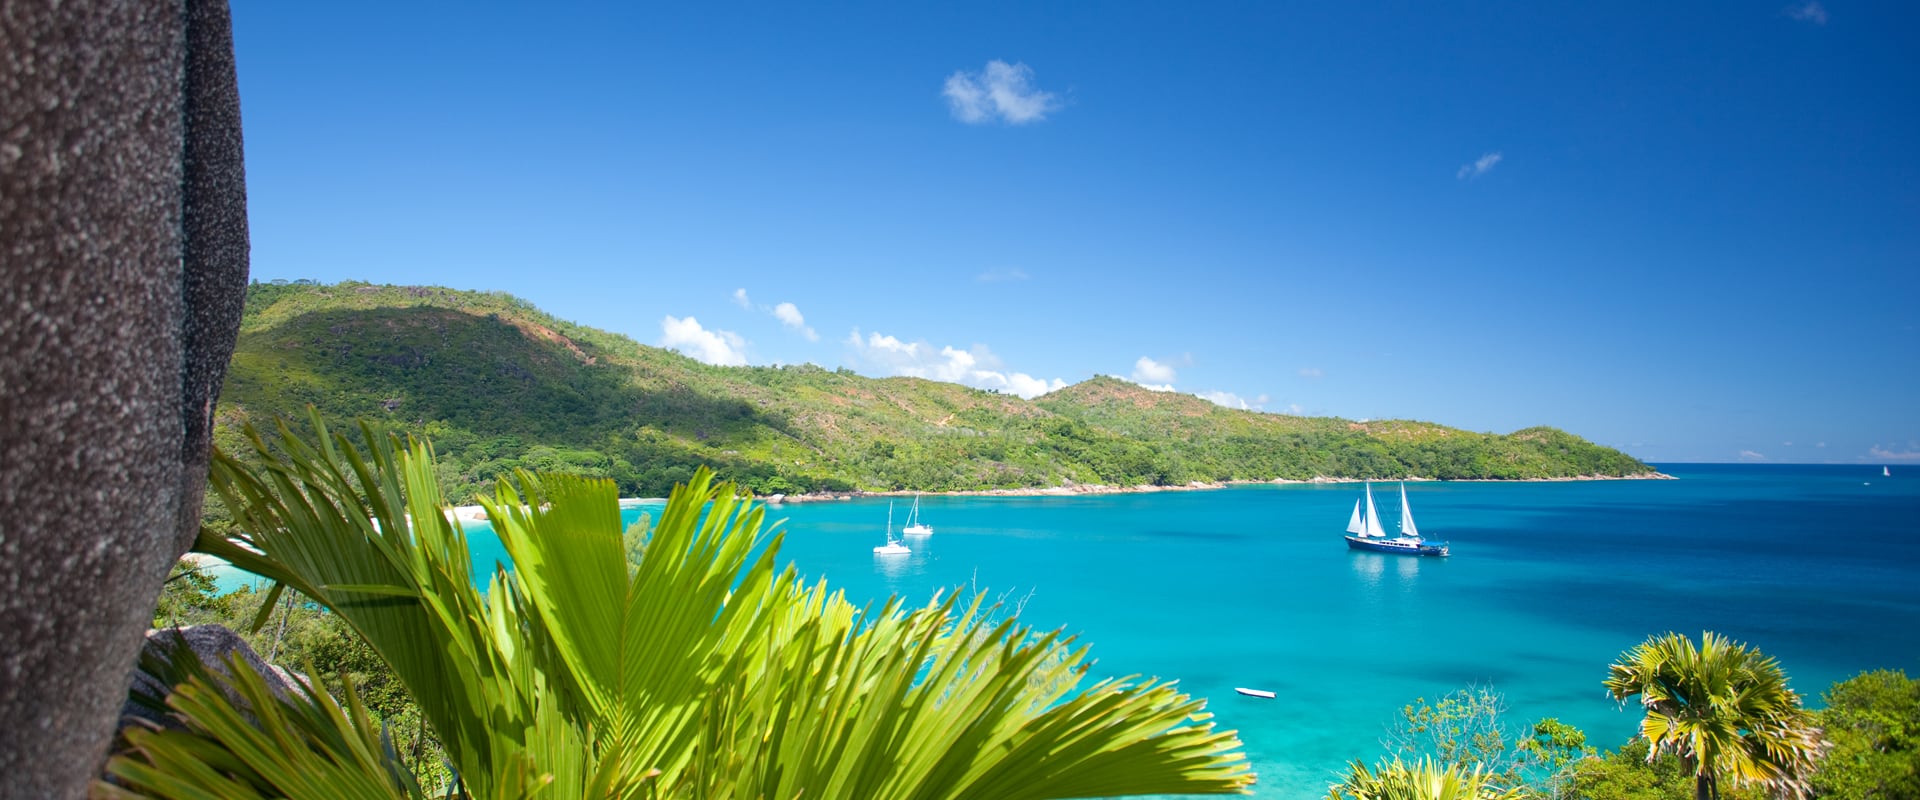 5 Small Ship Cruises in Seychelles - LiveAboard.com